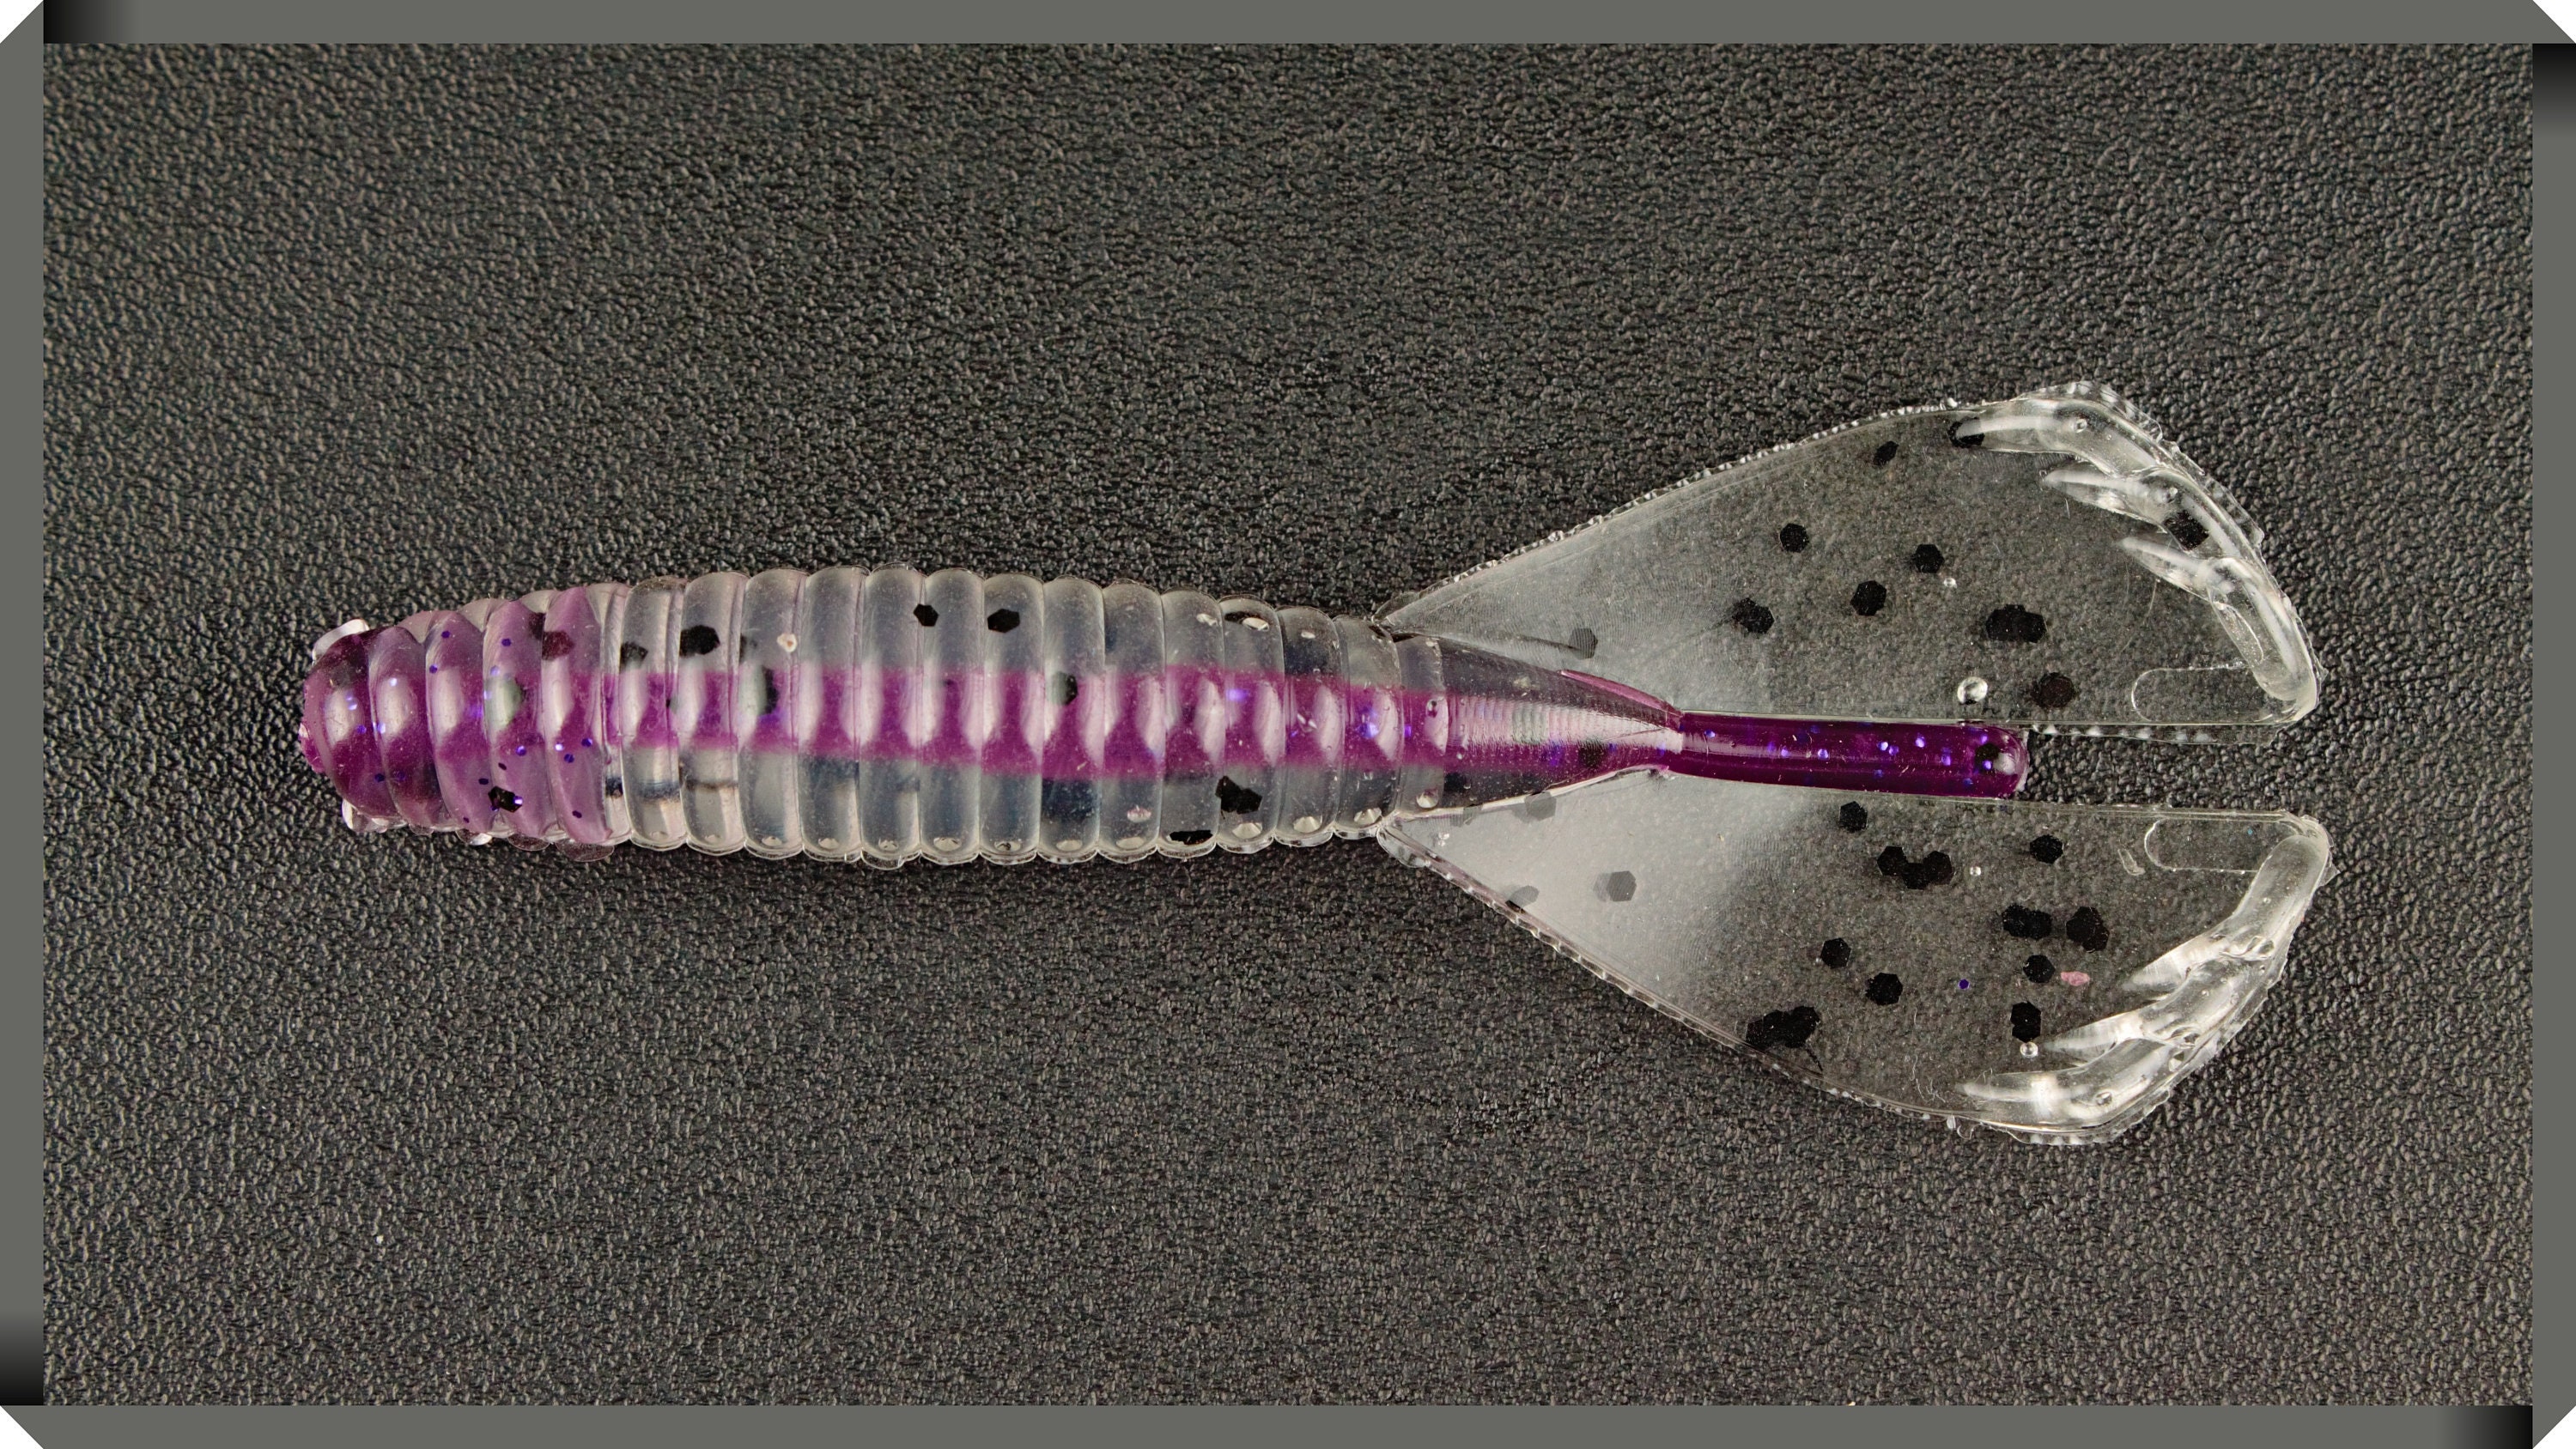 Grub Swim-tail Neon Core Bait / Bass Fishing Lure / Soft Plastic